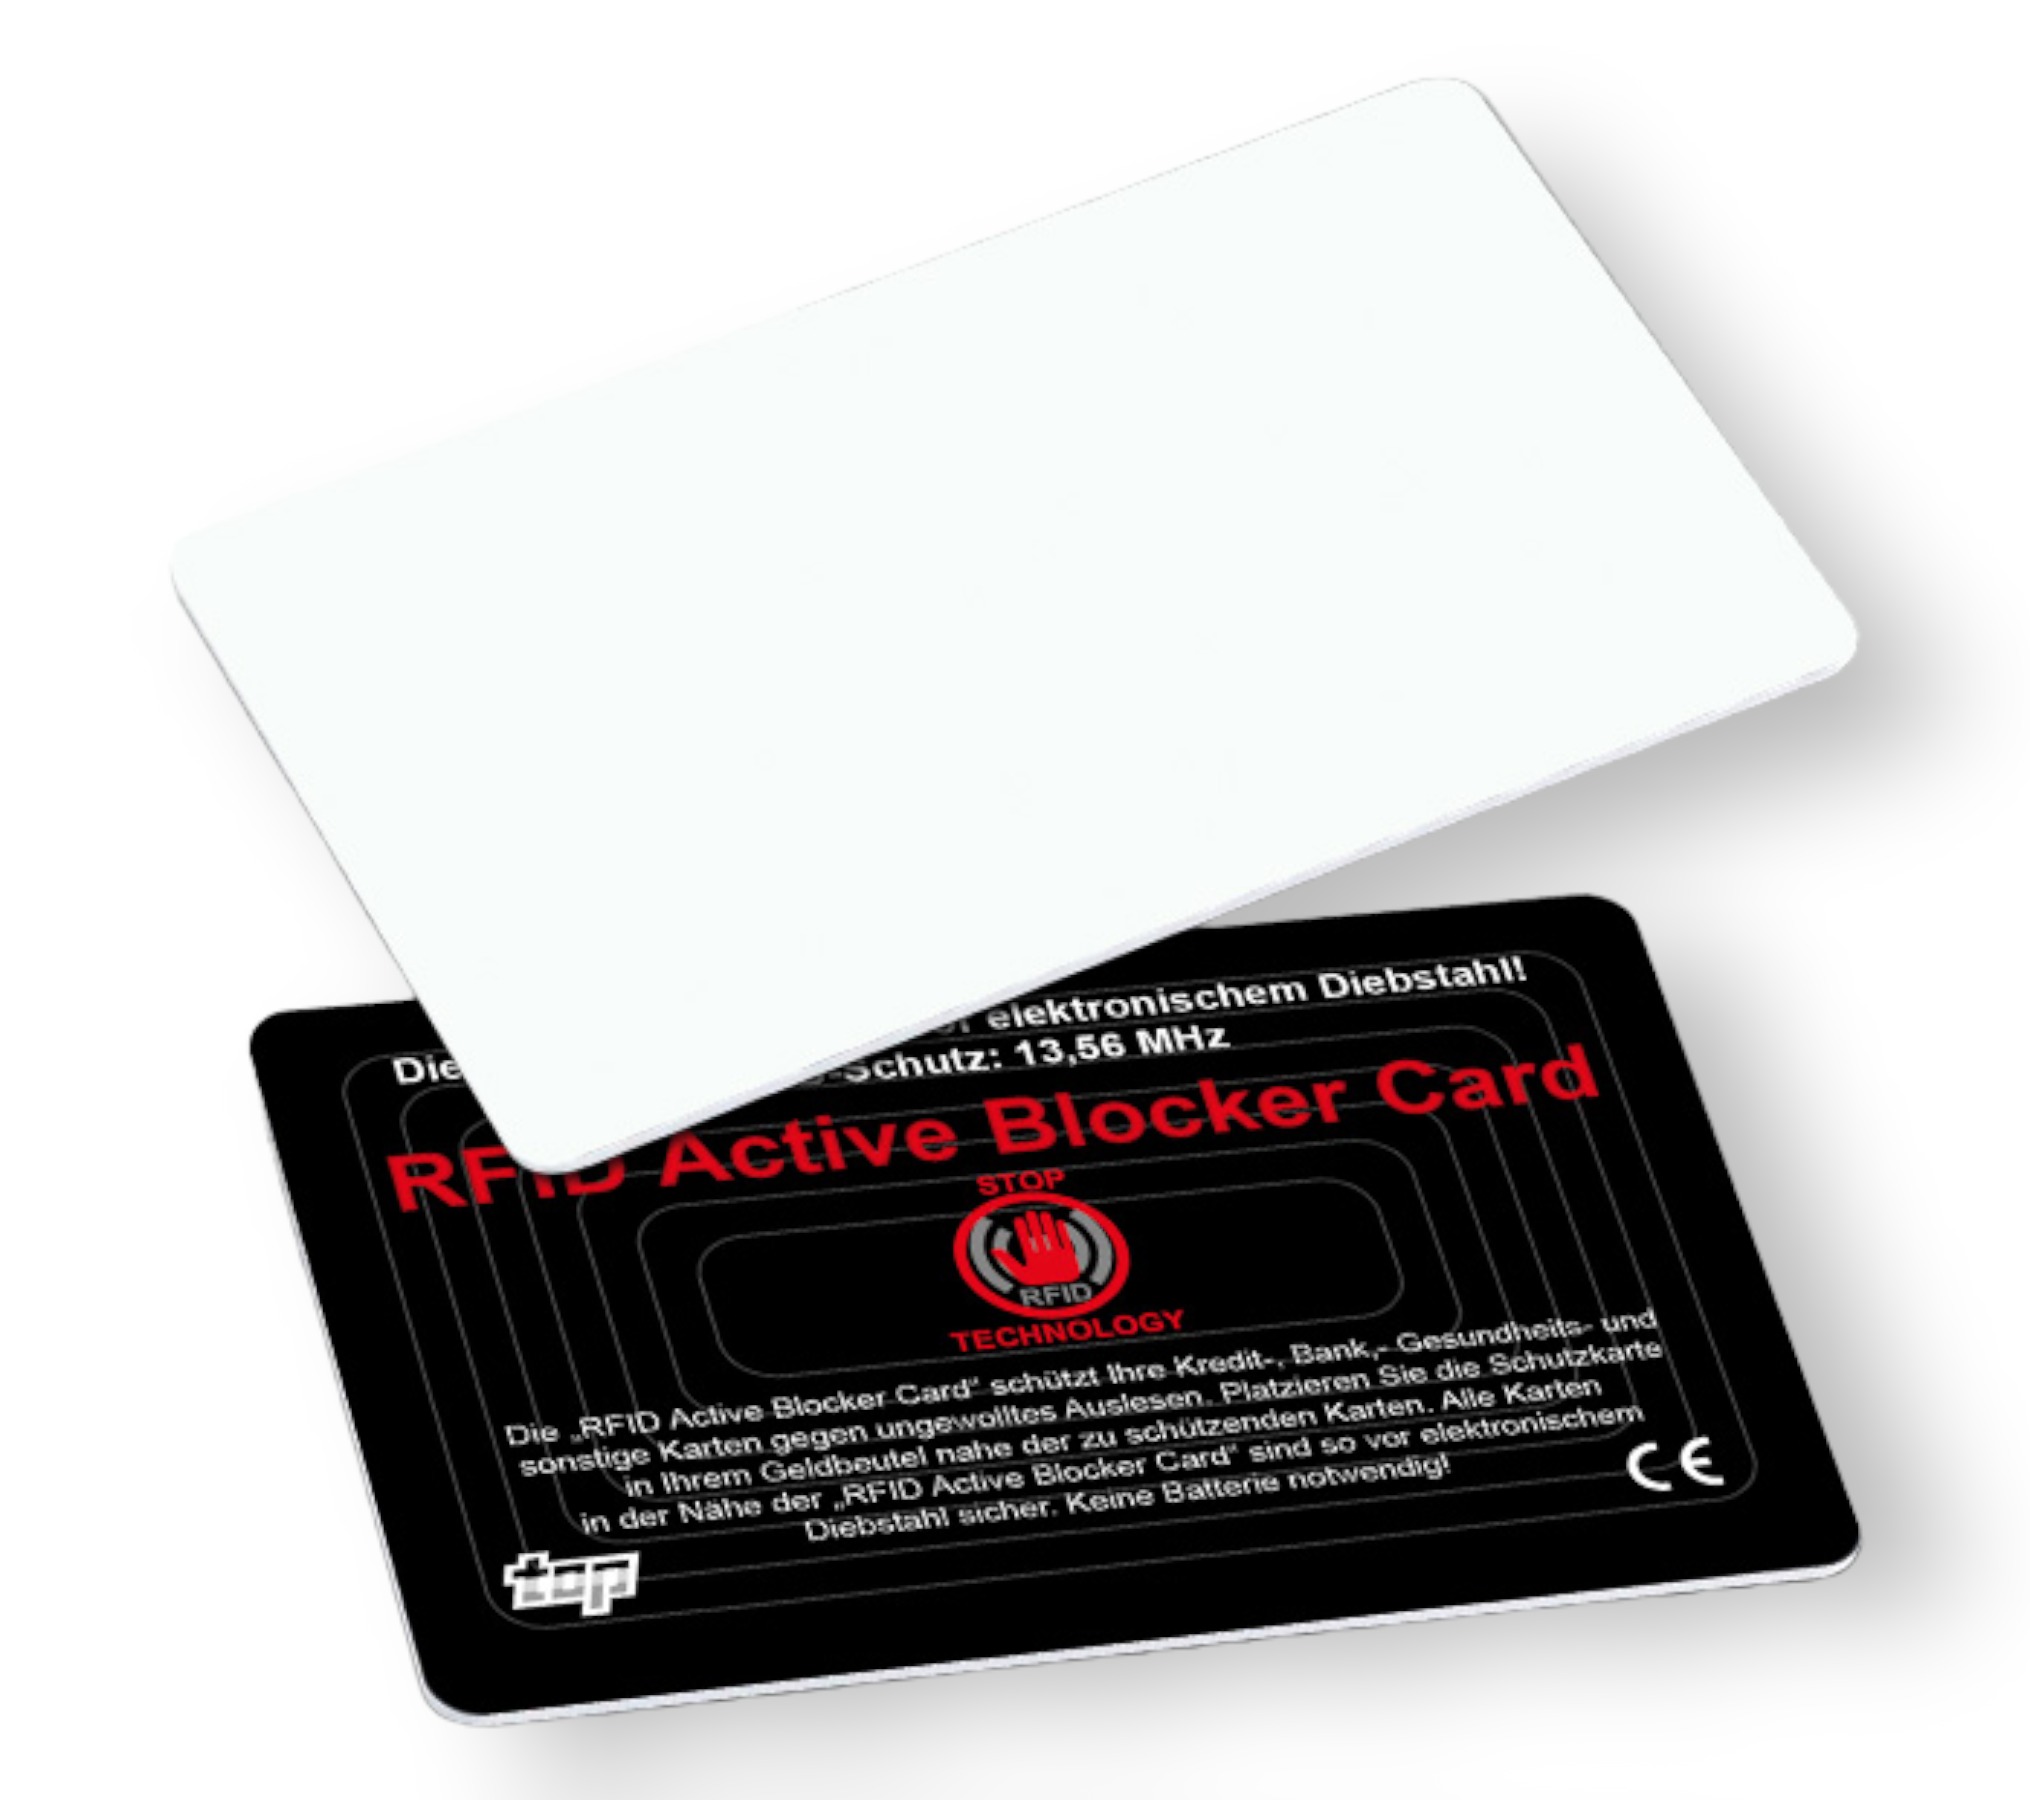 RFID-Active Blocker Card als bedruckter Werbeartikel